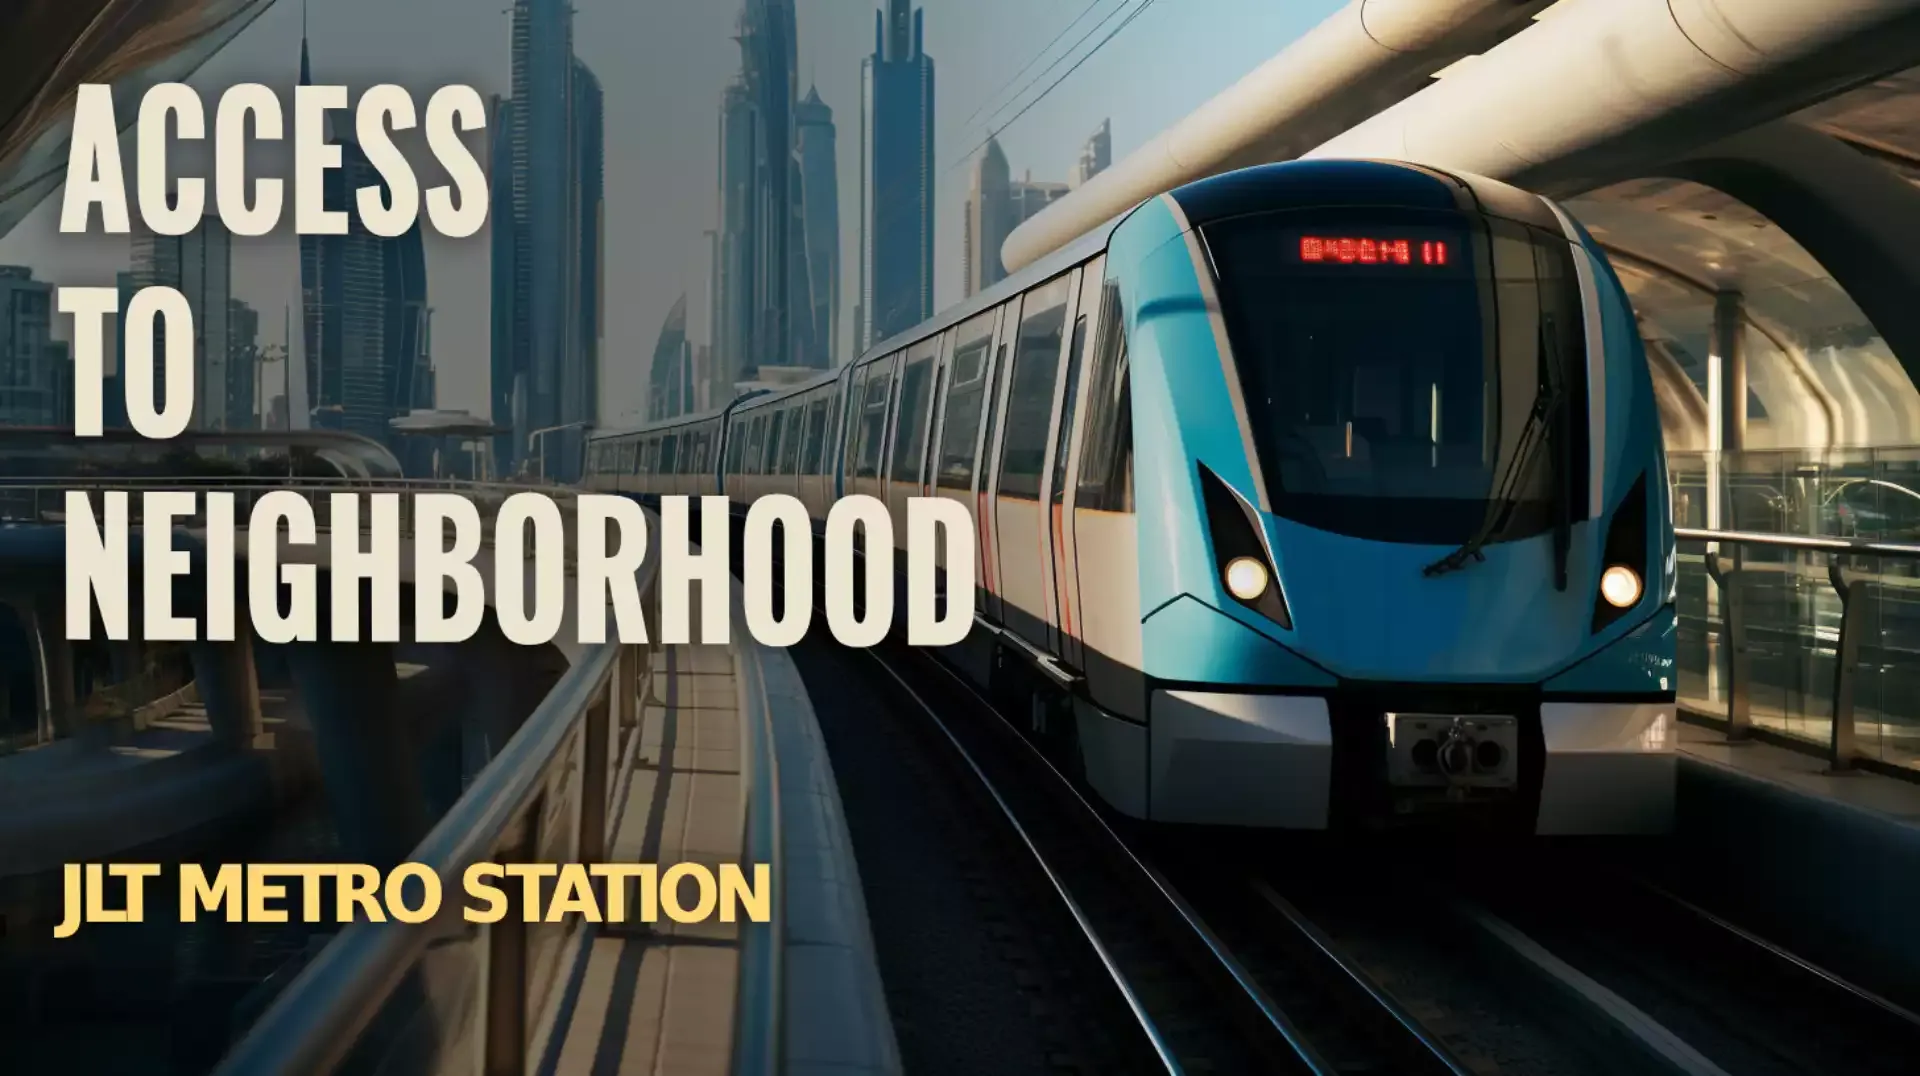 Neighborhood JLT Metro Station - Seamless Transit Experience